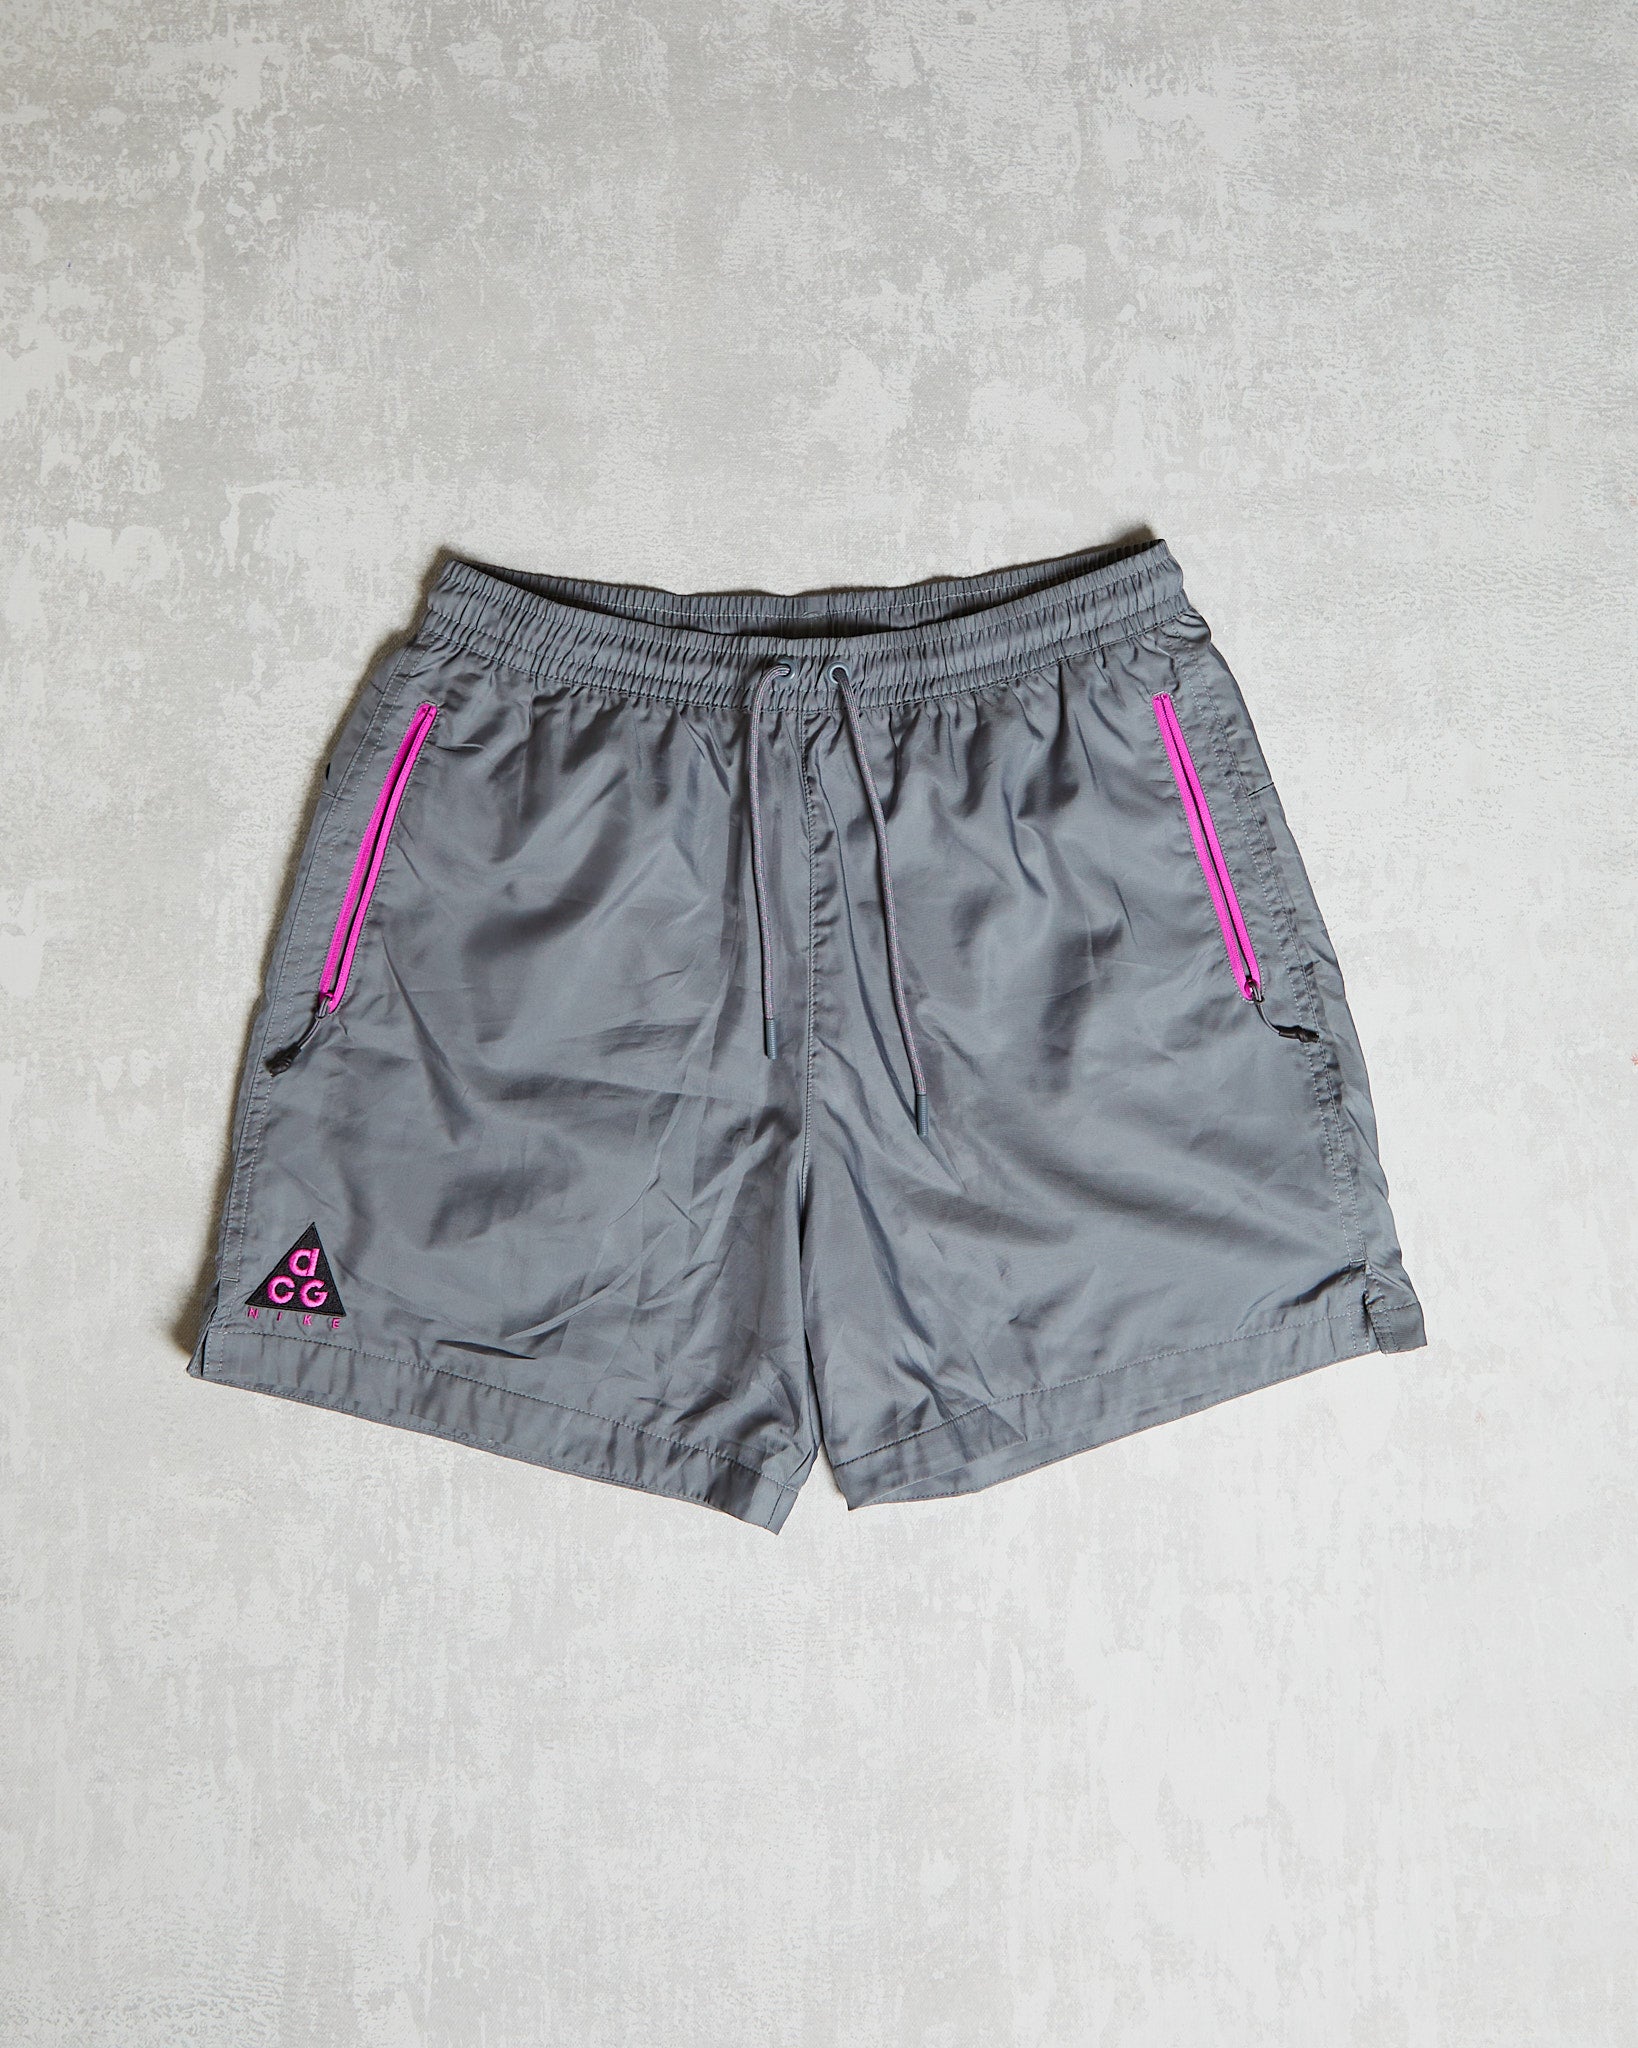 Nike ACG Shorts Grey / Pink 2018